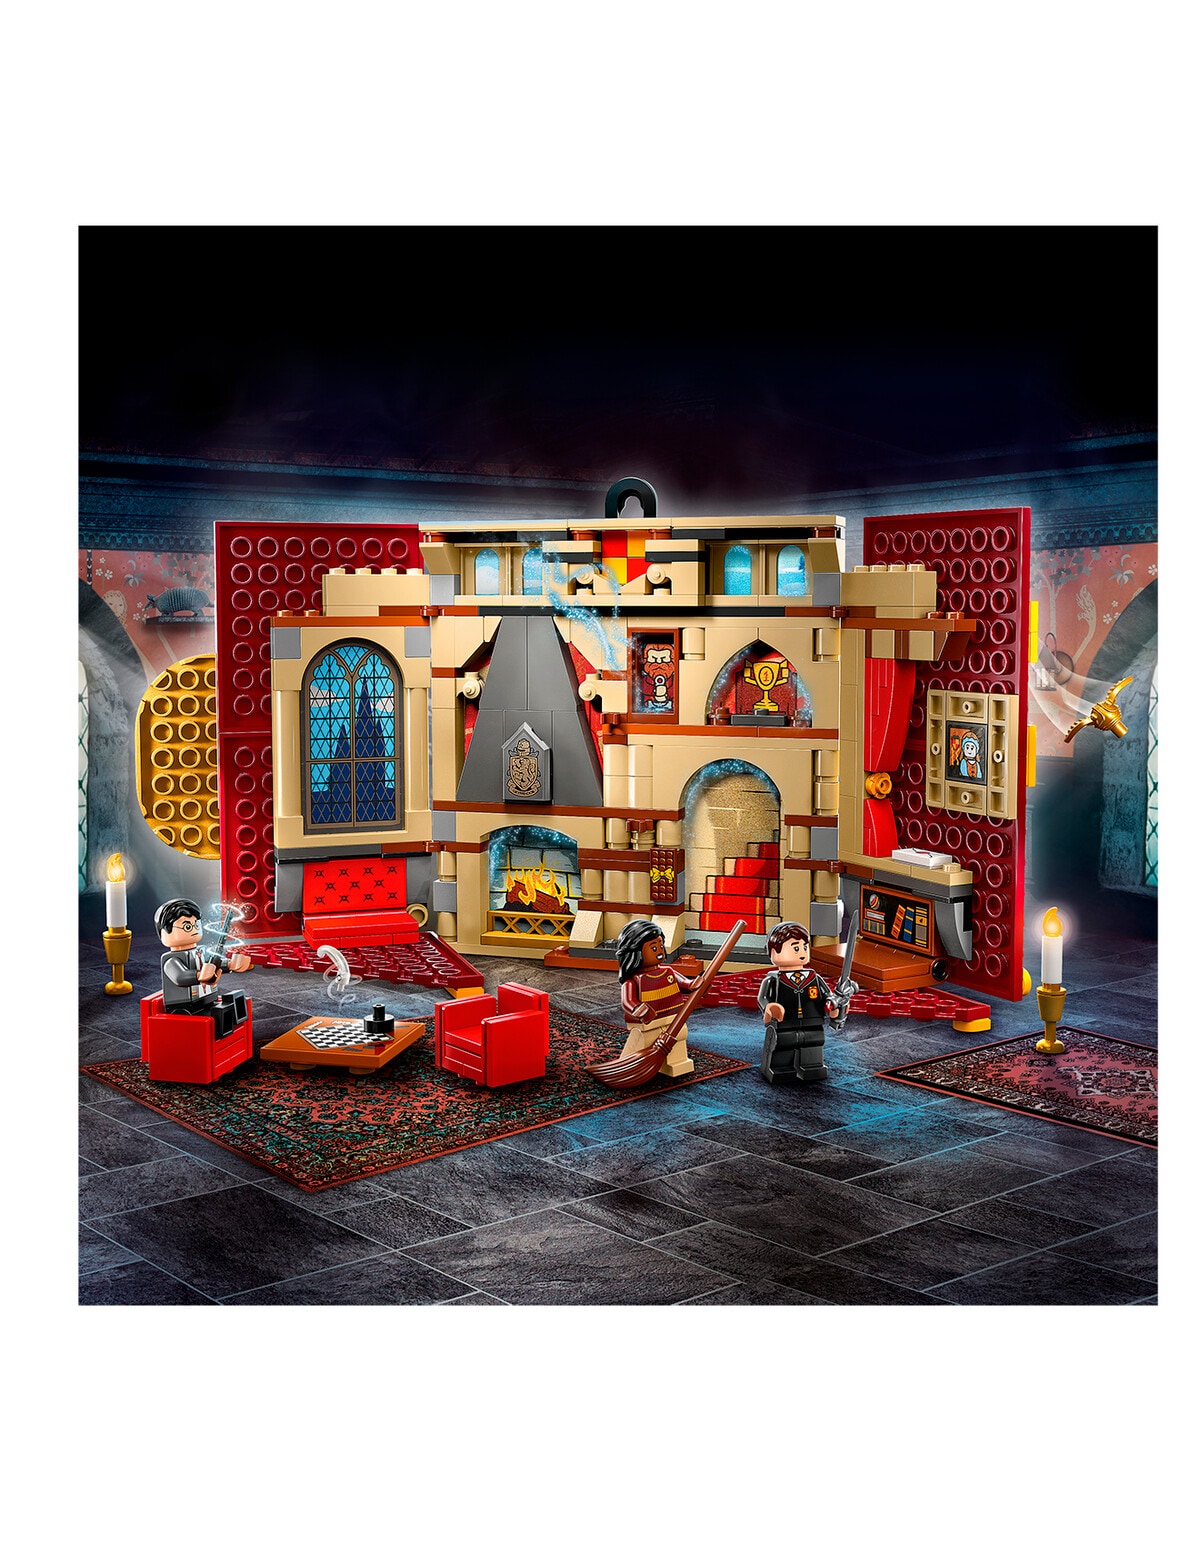 Gryffindor house wall banner - hogwarts castelo sala comum - lego harry  oleiro - Prenatal